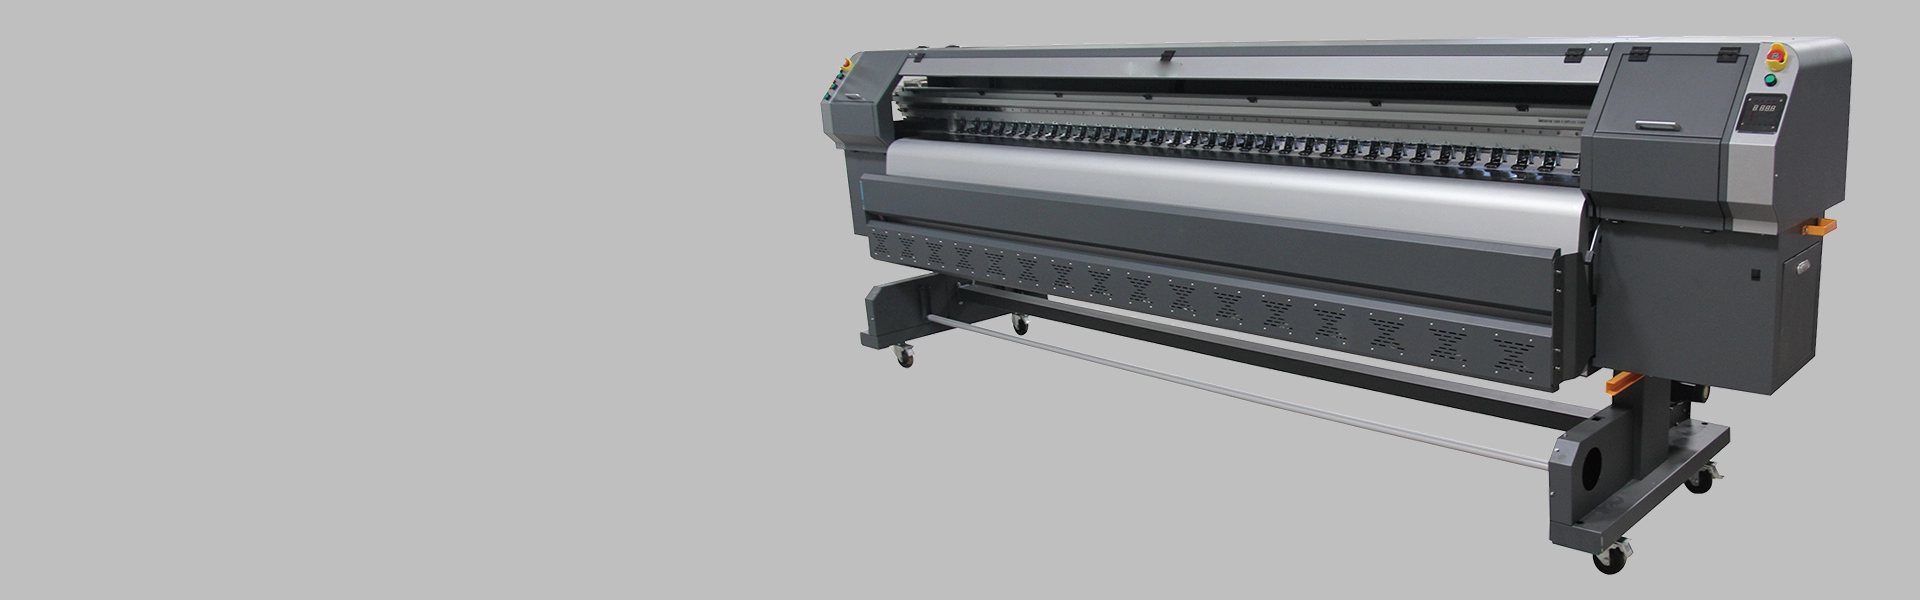 Impresora solvente Konica 512i CK8